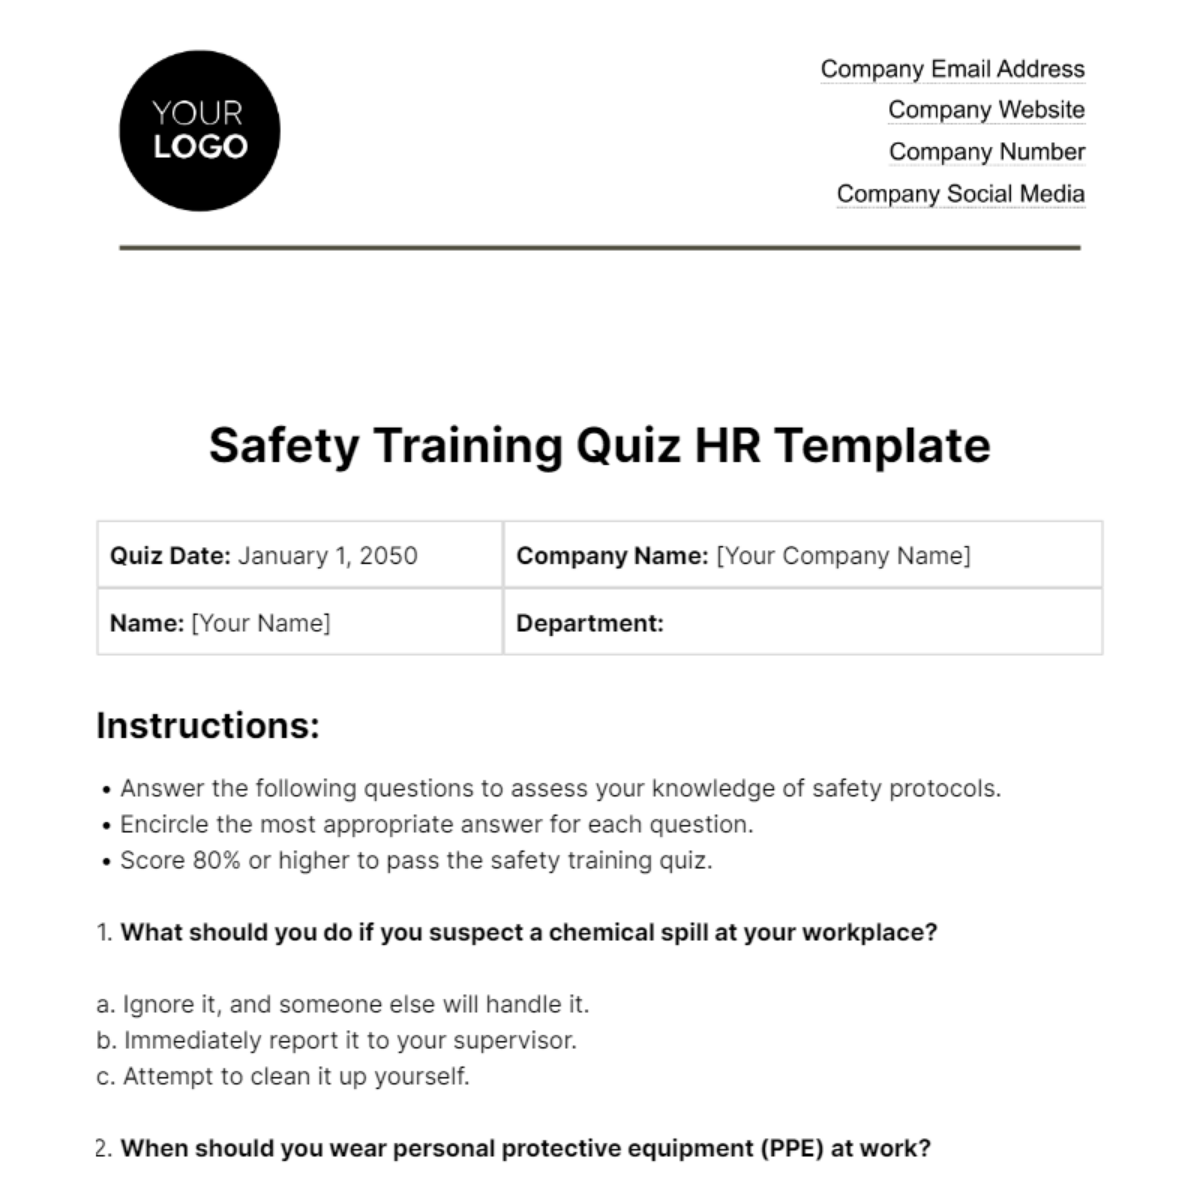 Free Safety Training Quiz HR Template